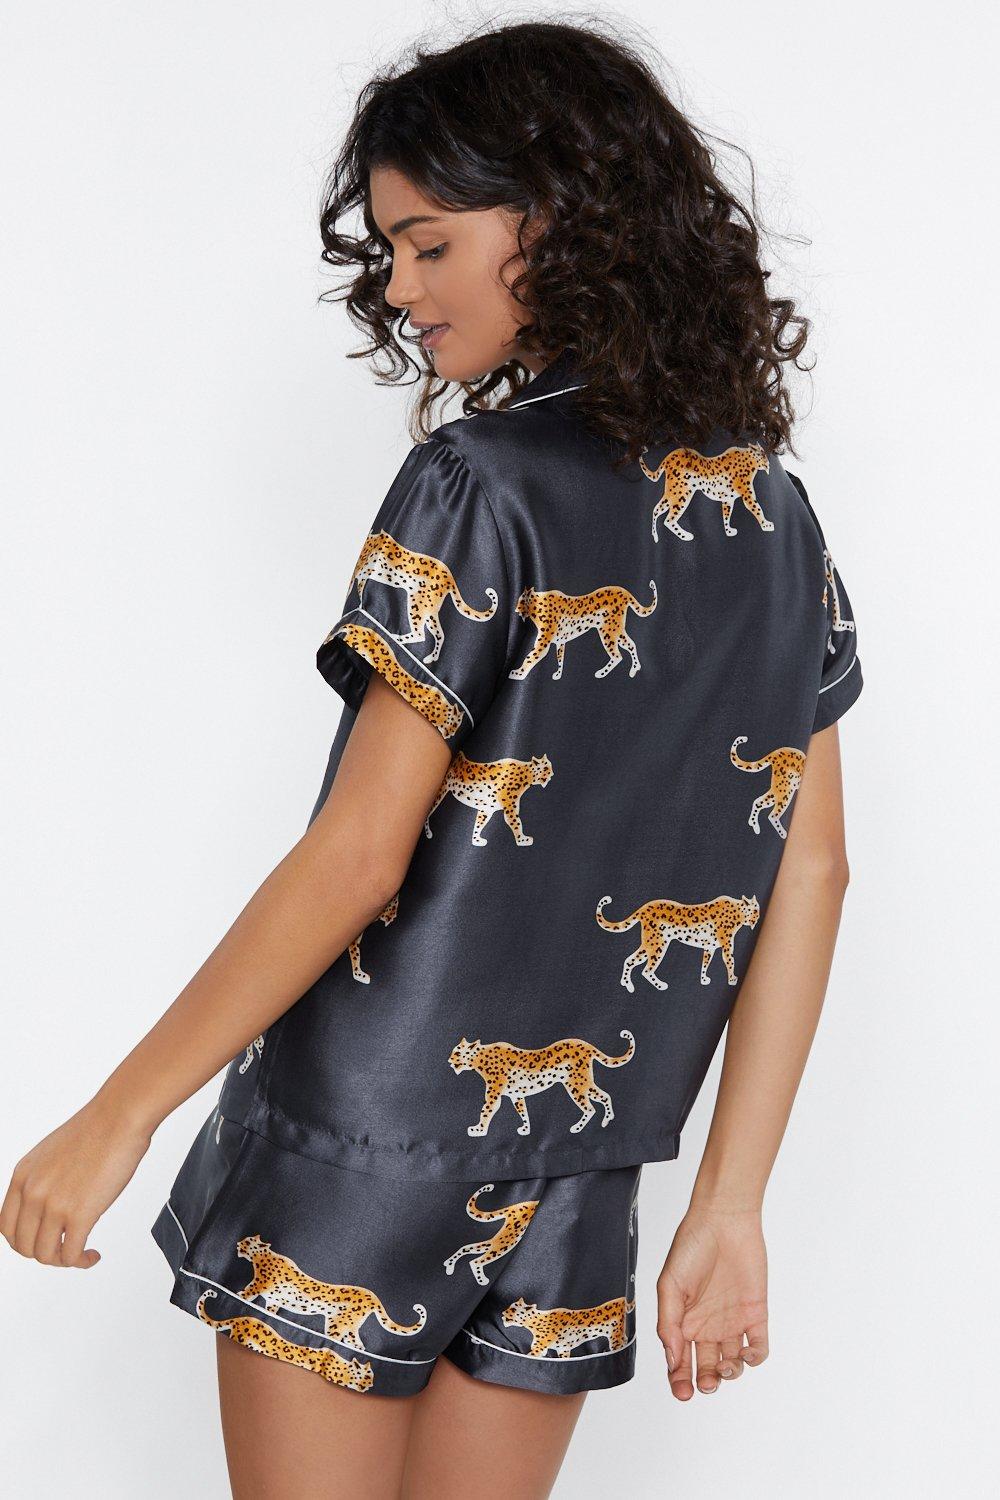 cheetah pajama set